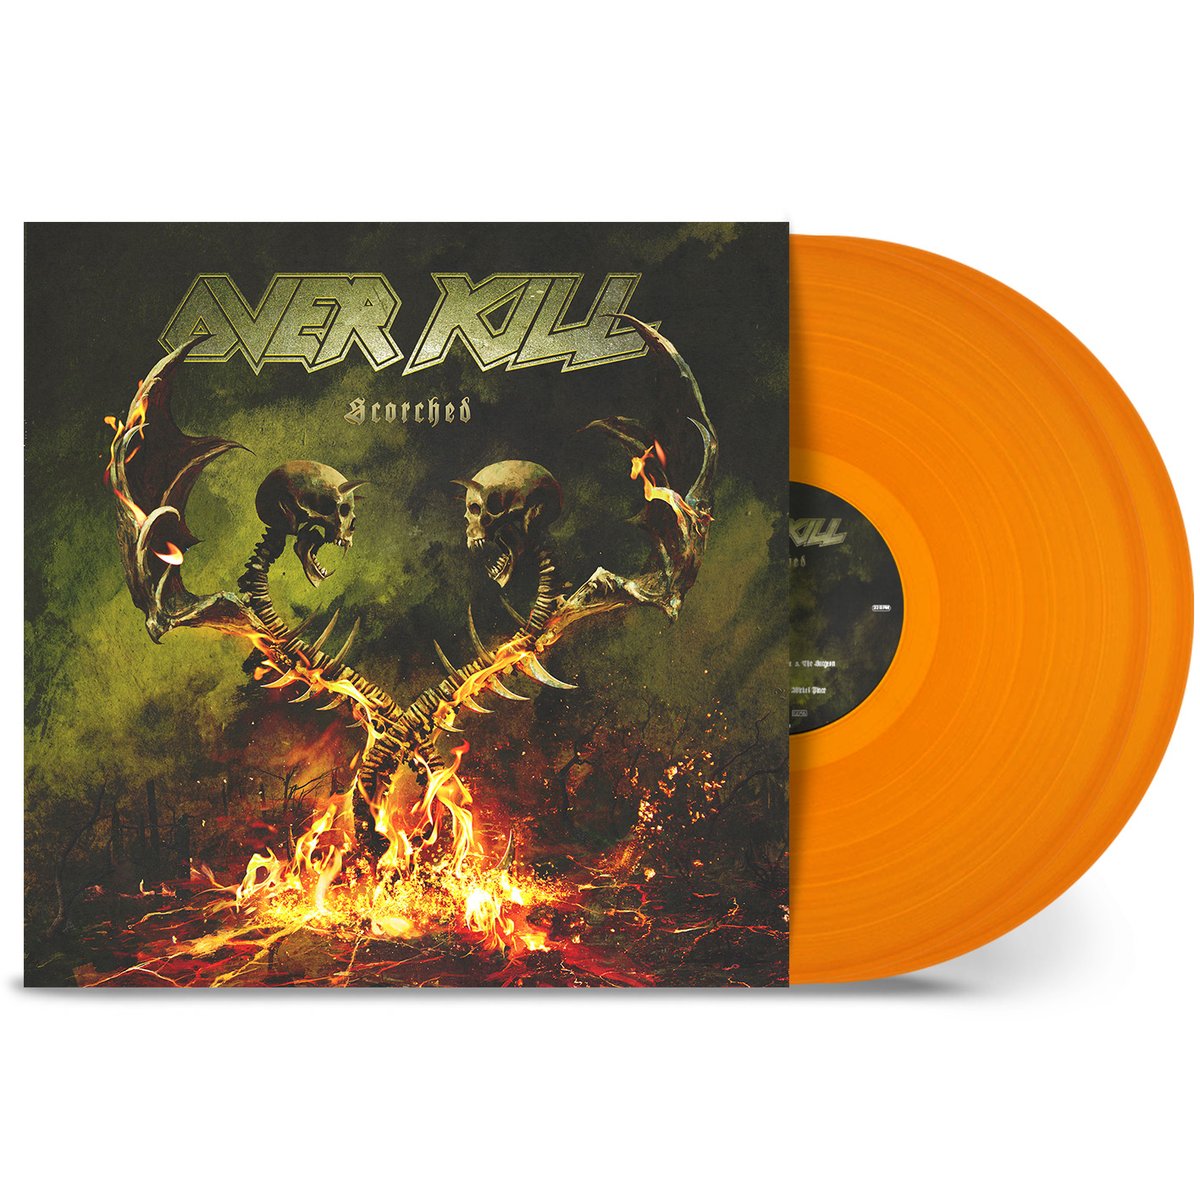 SCORCHED new vinyl color out Nov. 24th! 2LP Orange Vinyl (Ltd to 2,300) 🔥 bfan.link/Overkill-Scorc… #Overkill #ThrashMetal #Thrash #Metal